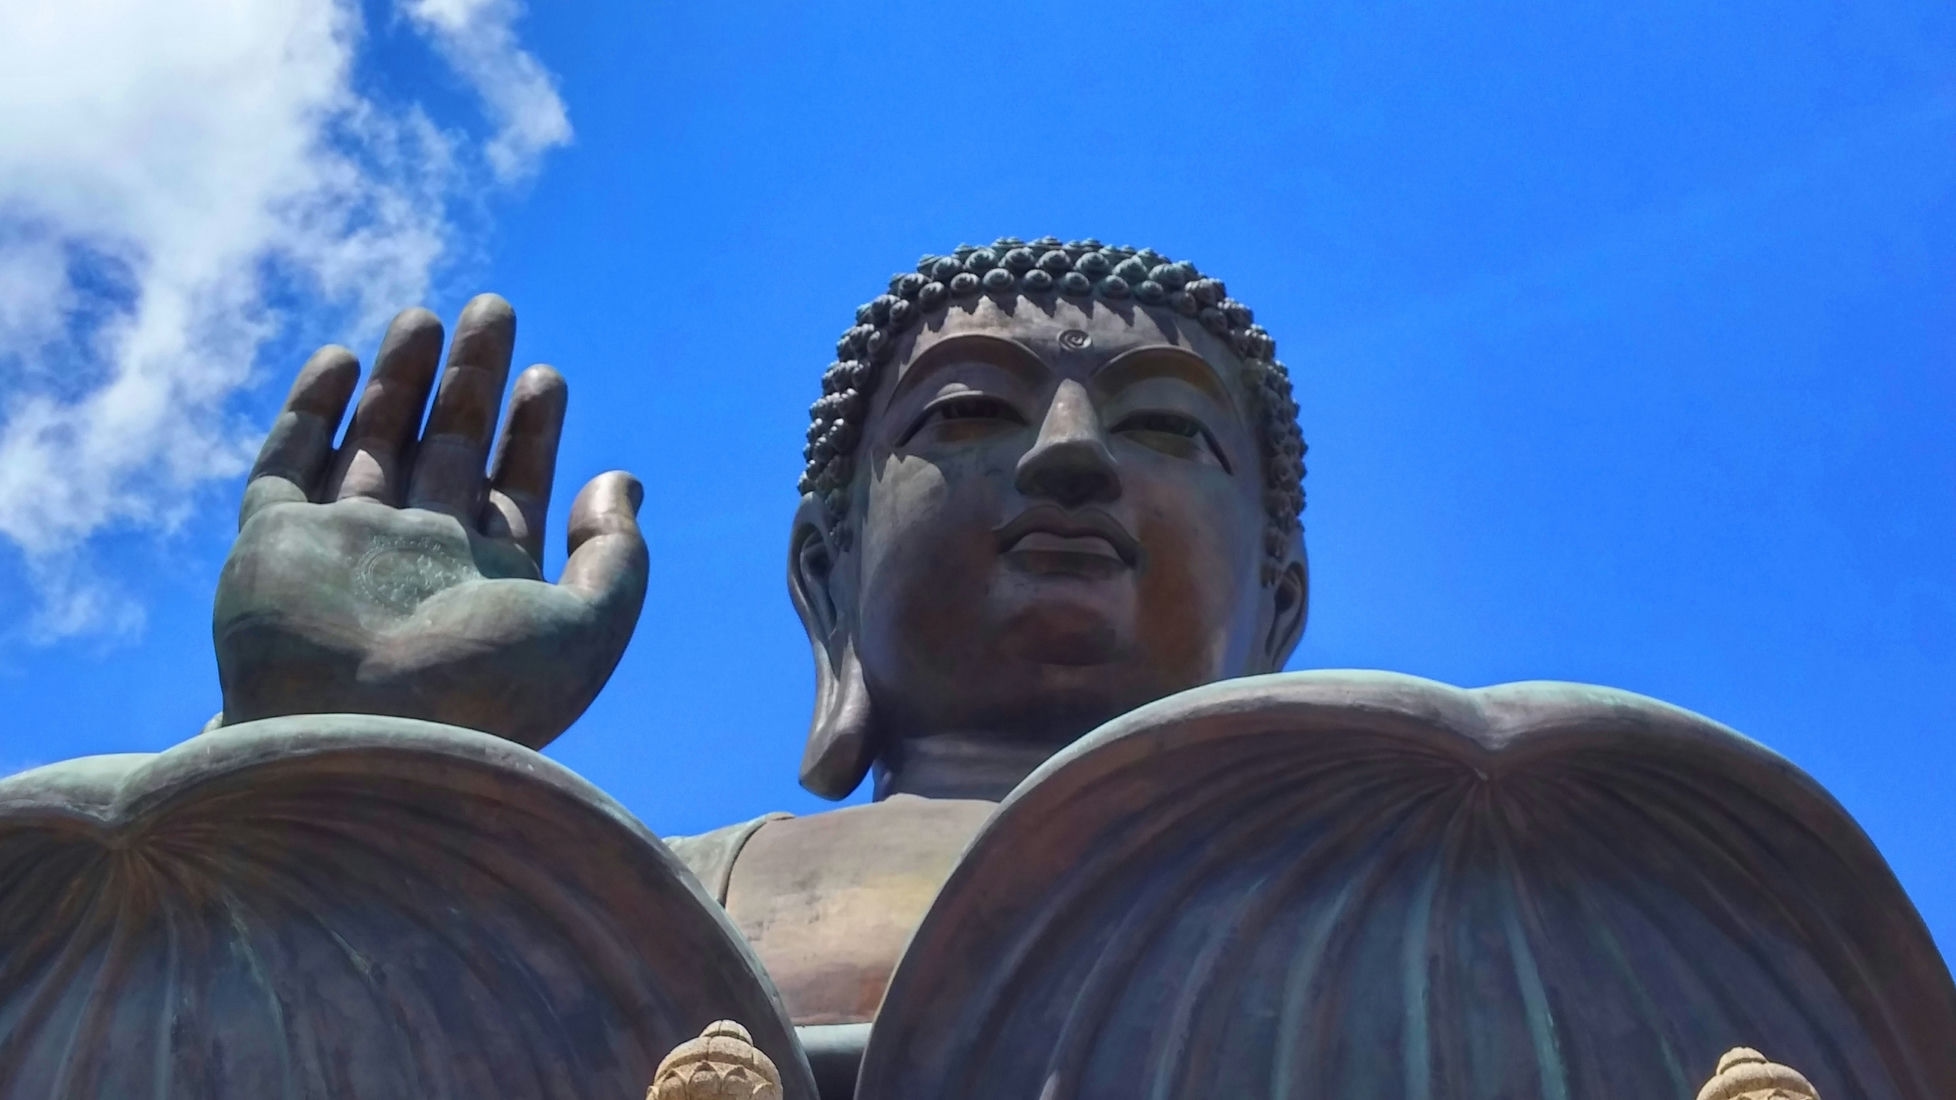 Big Buddha blesses everyone by “WAVING HELLO”